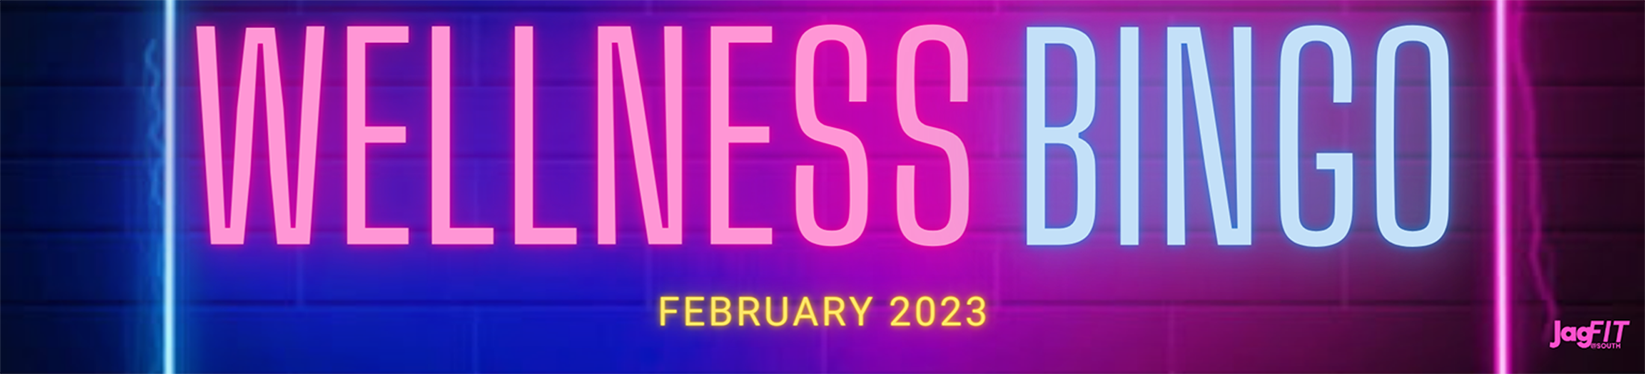 Wellness Bingo, February 2023